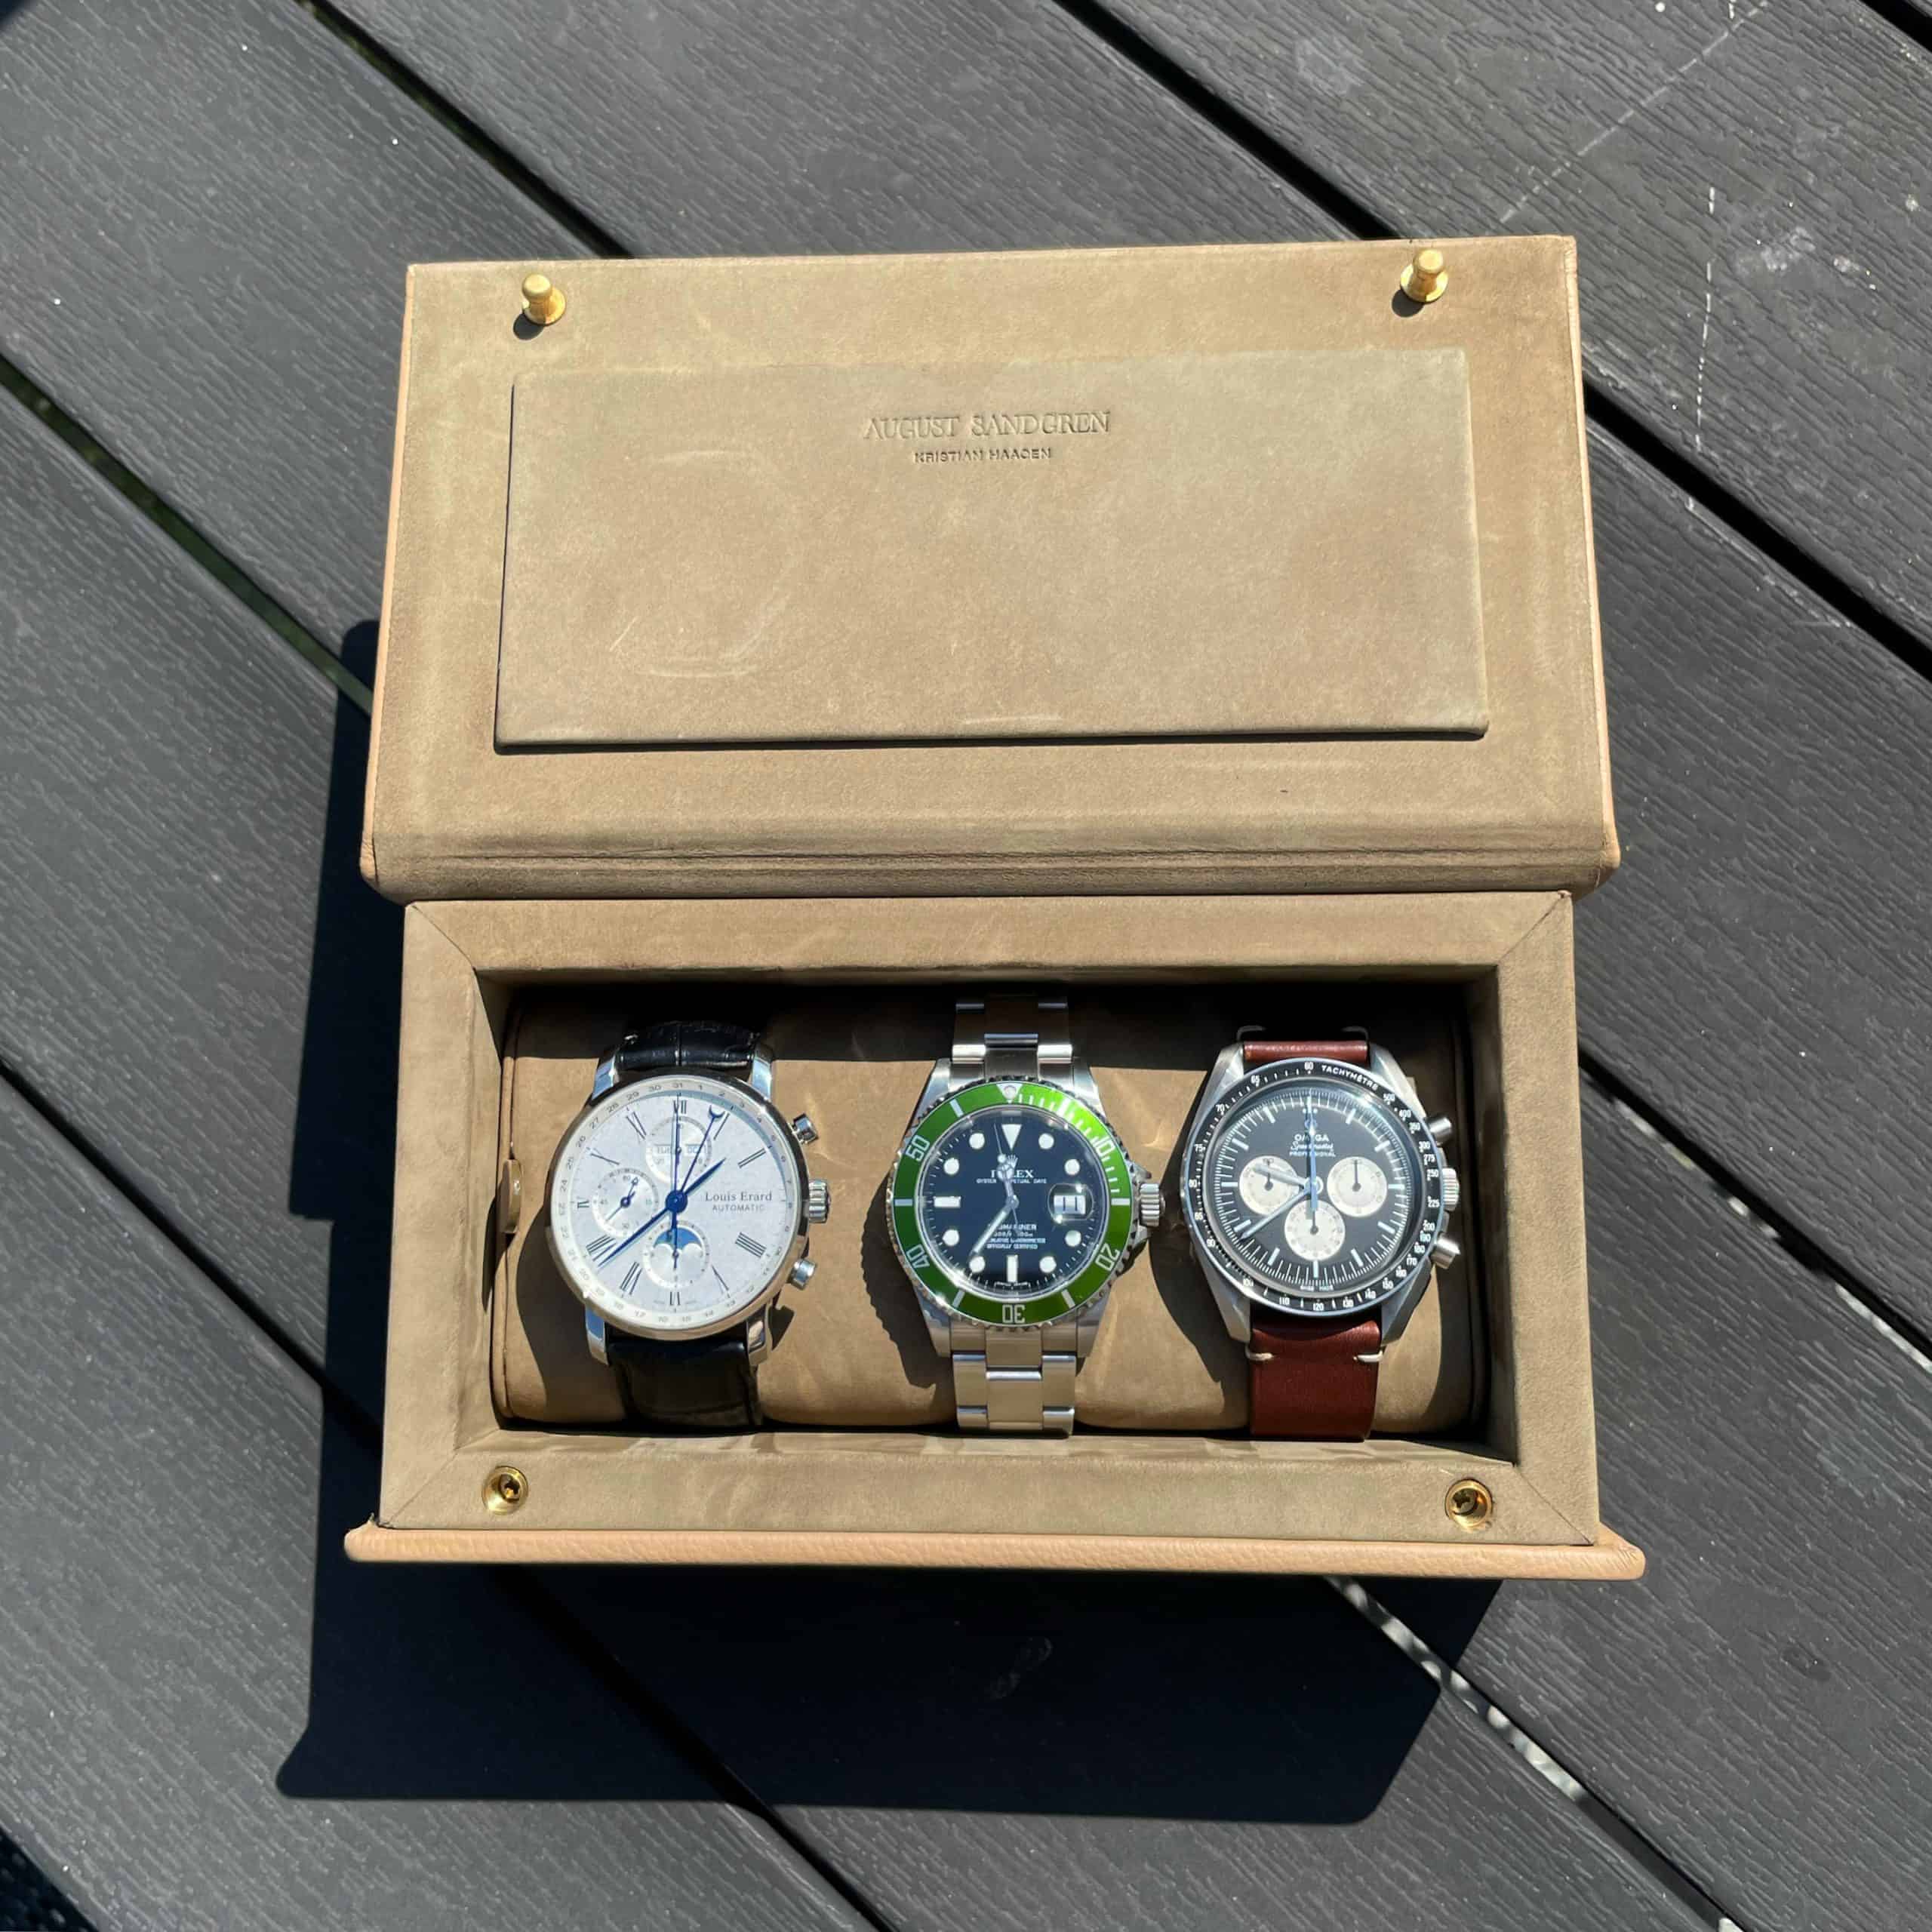 August Sandgren Watchbox Small, Light Brown Watch Box, made in portugal, handmade, leather, nubuck, watch box for three watches, watch display, watch storage